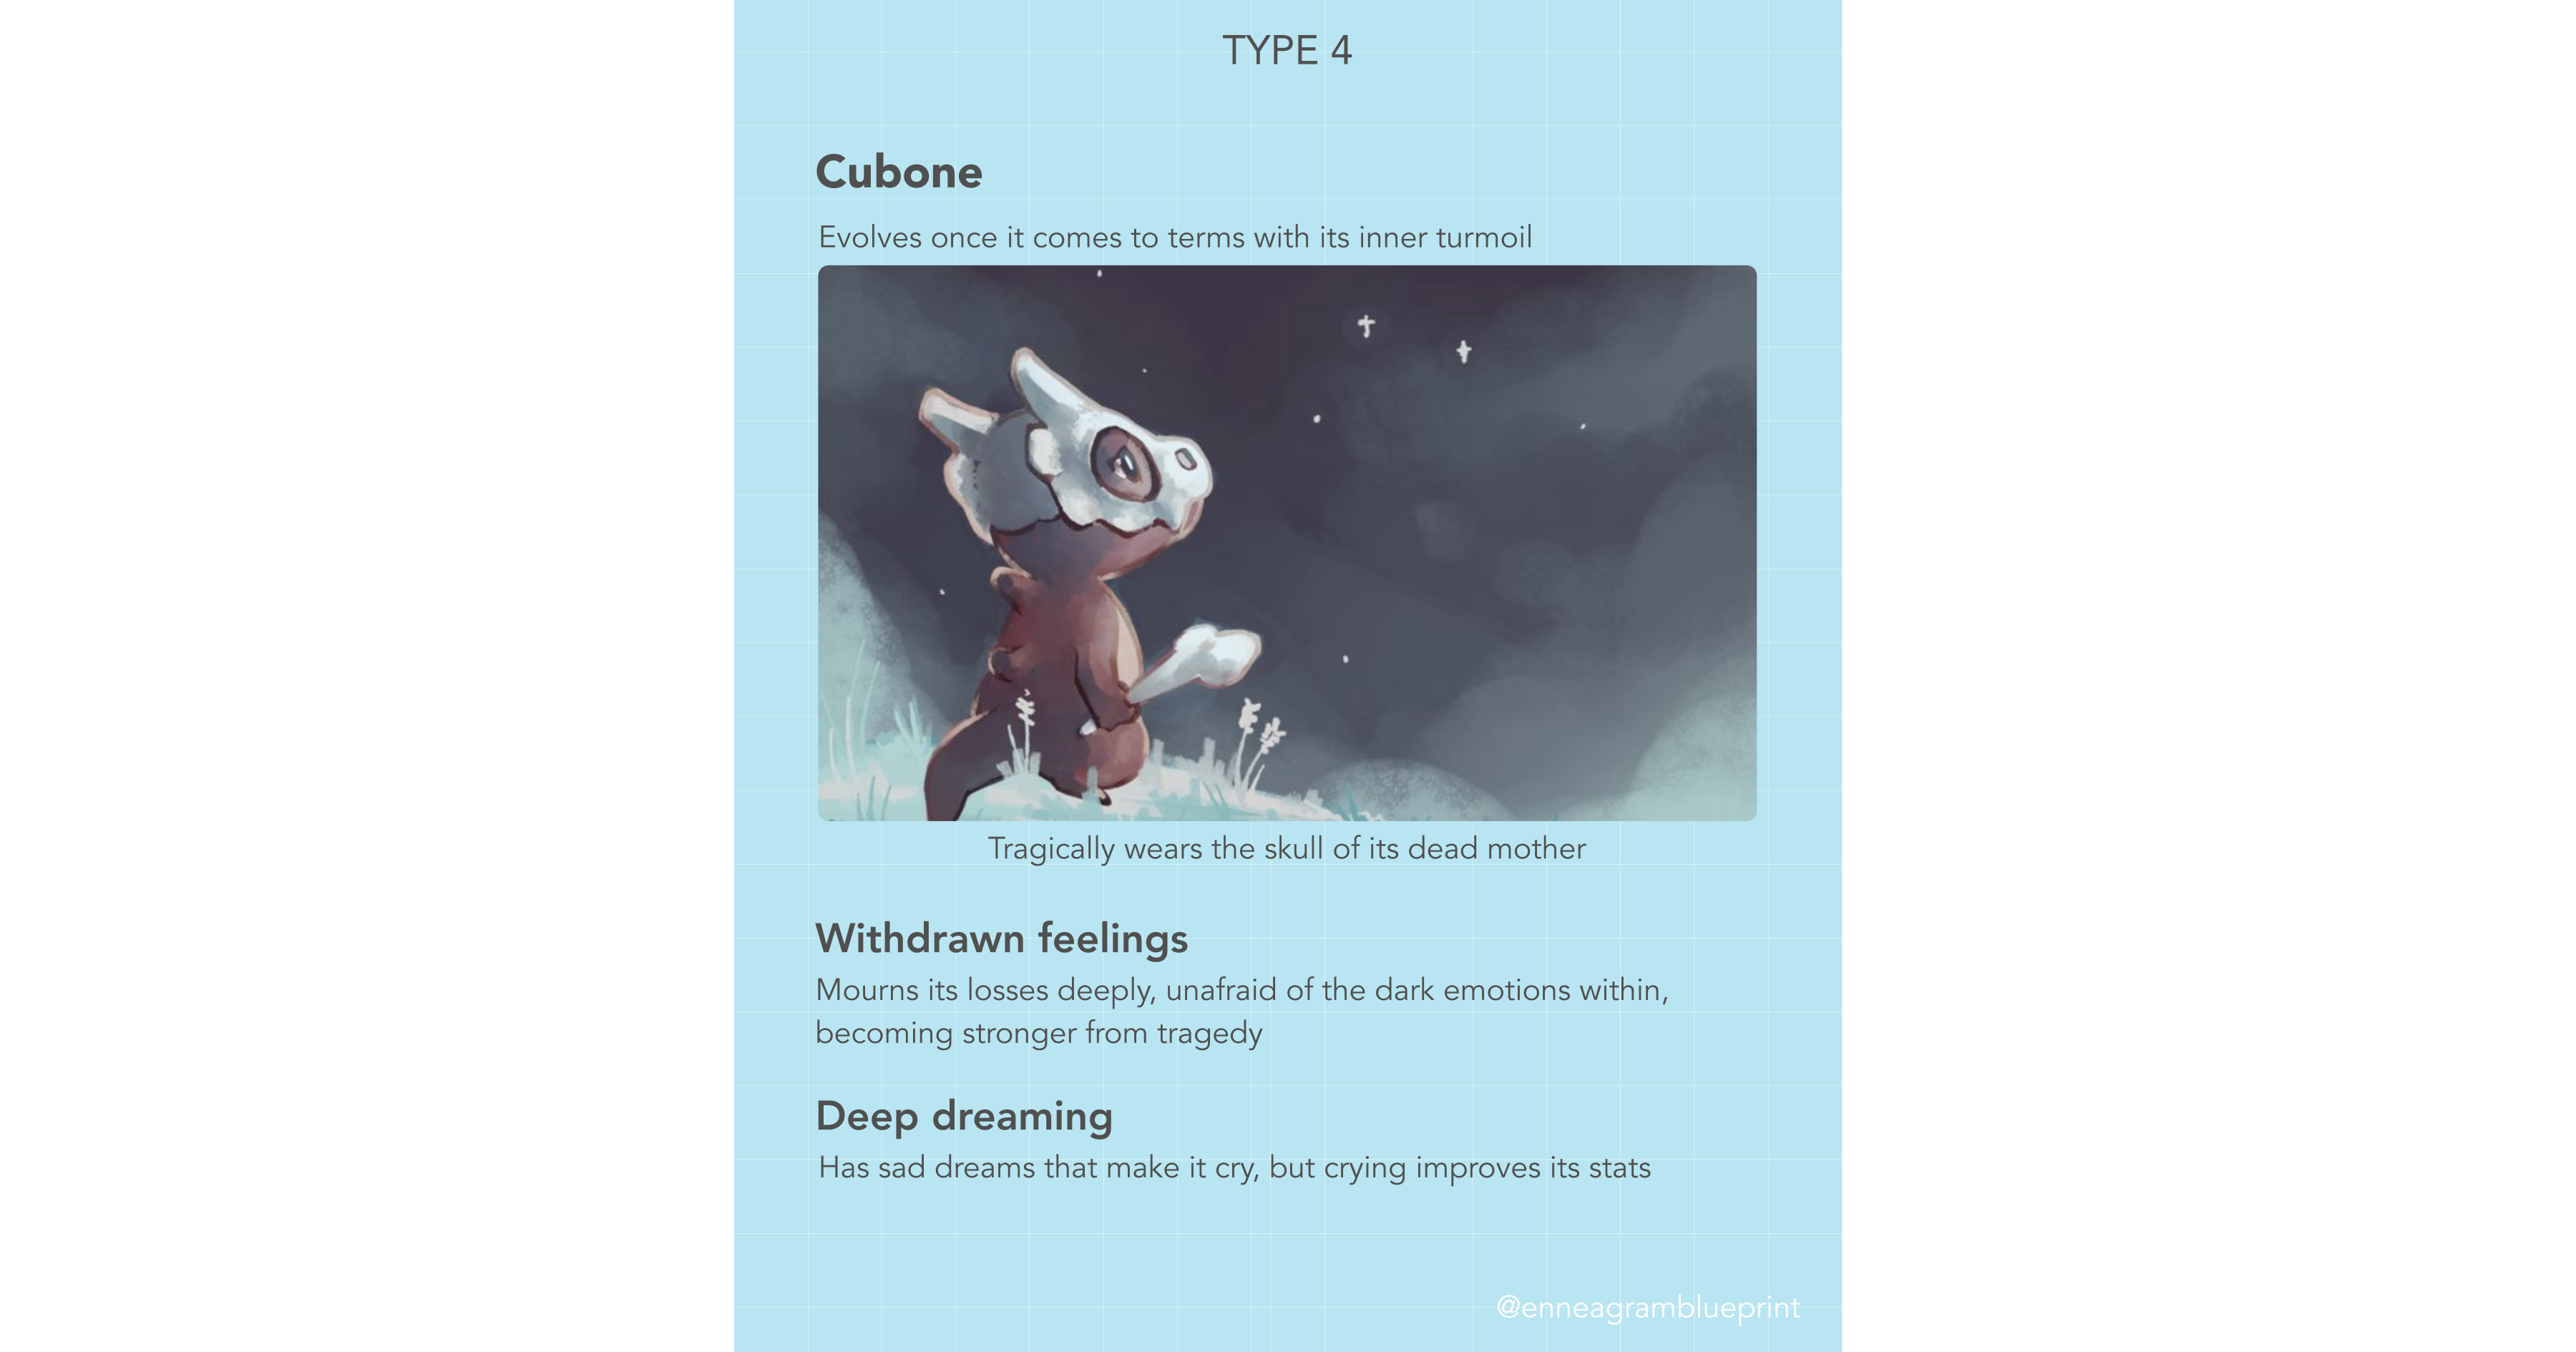 Cubone Pokemon card